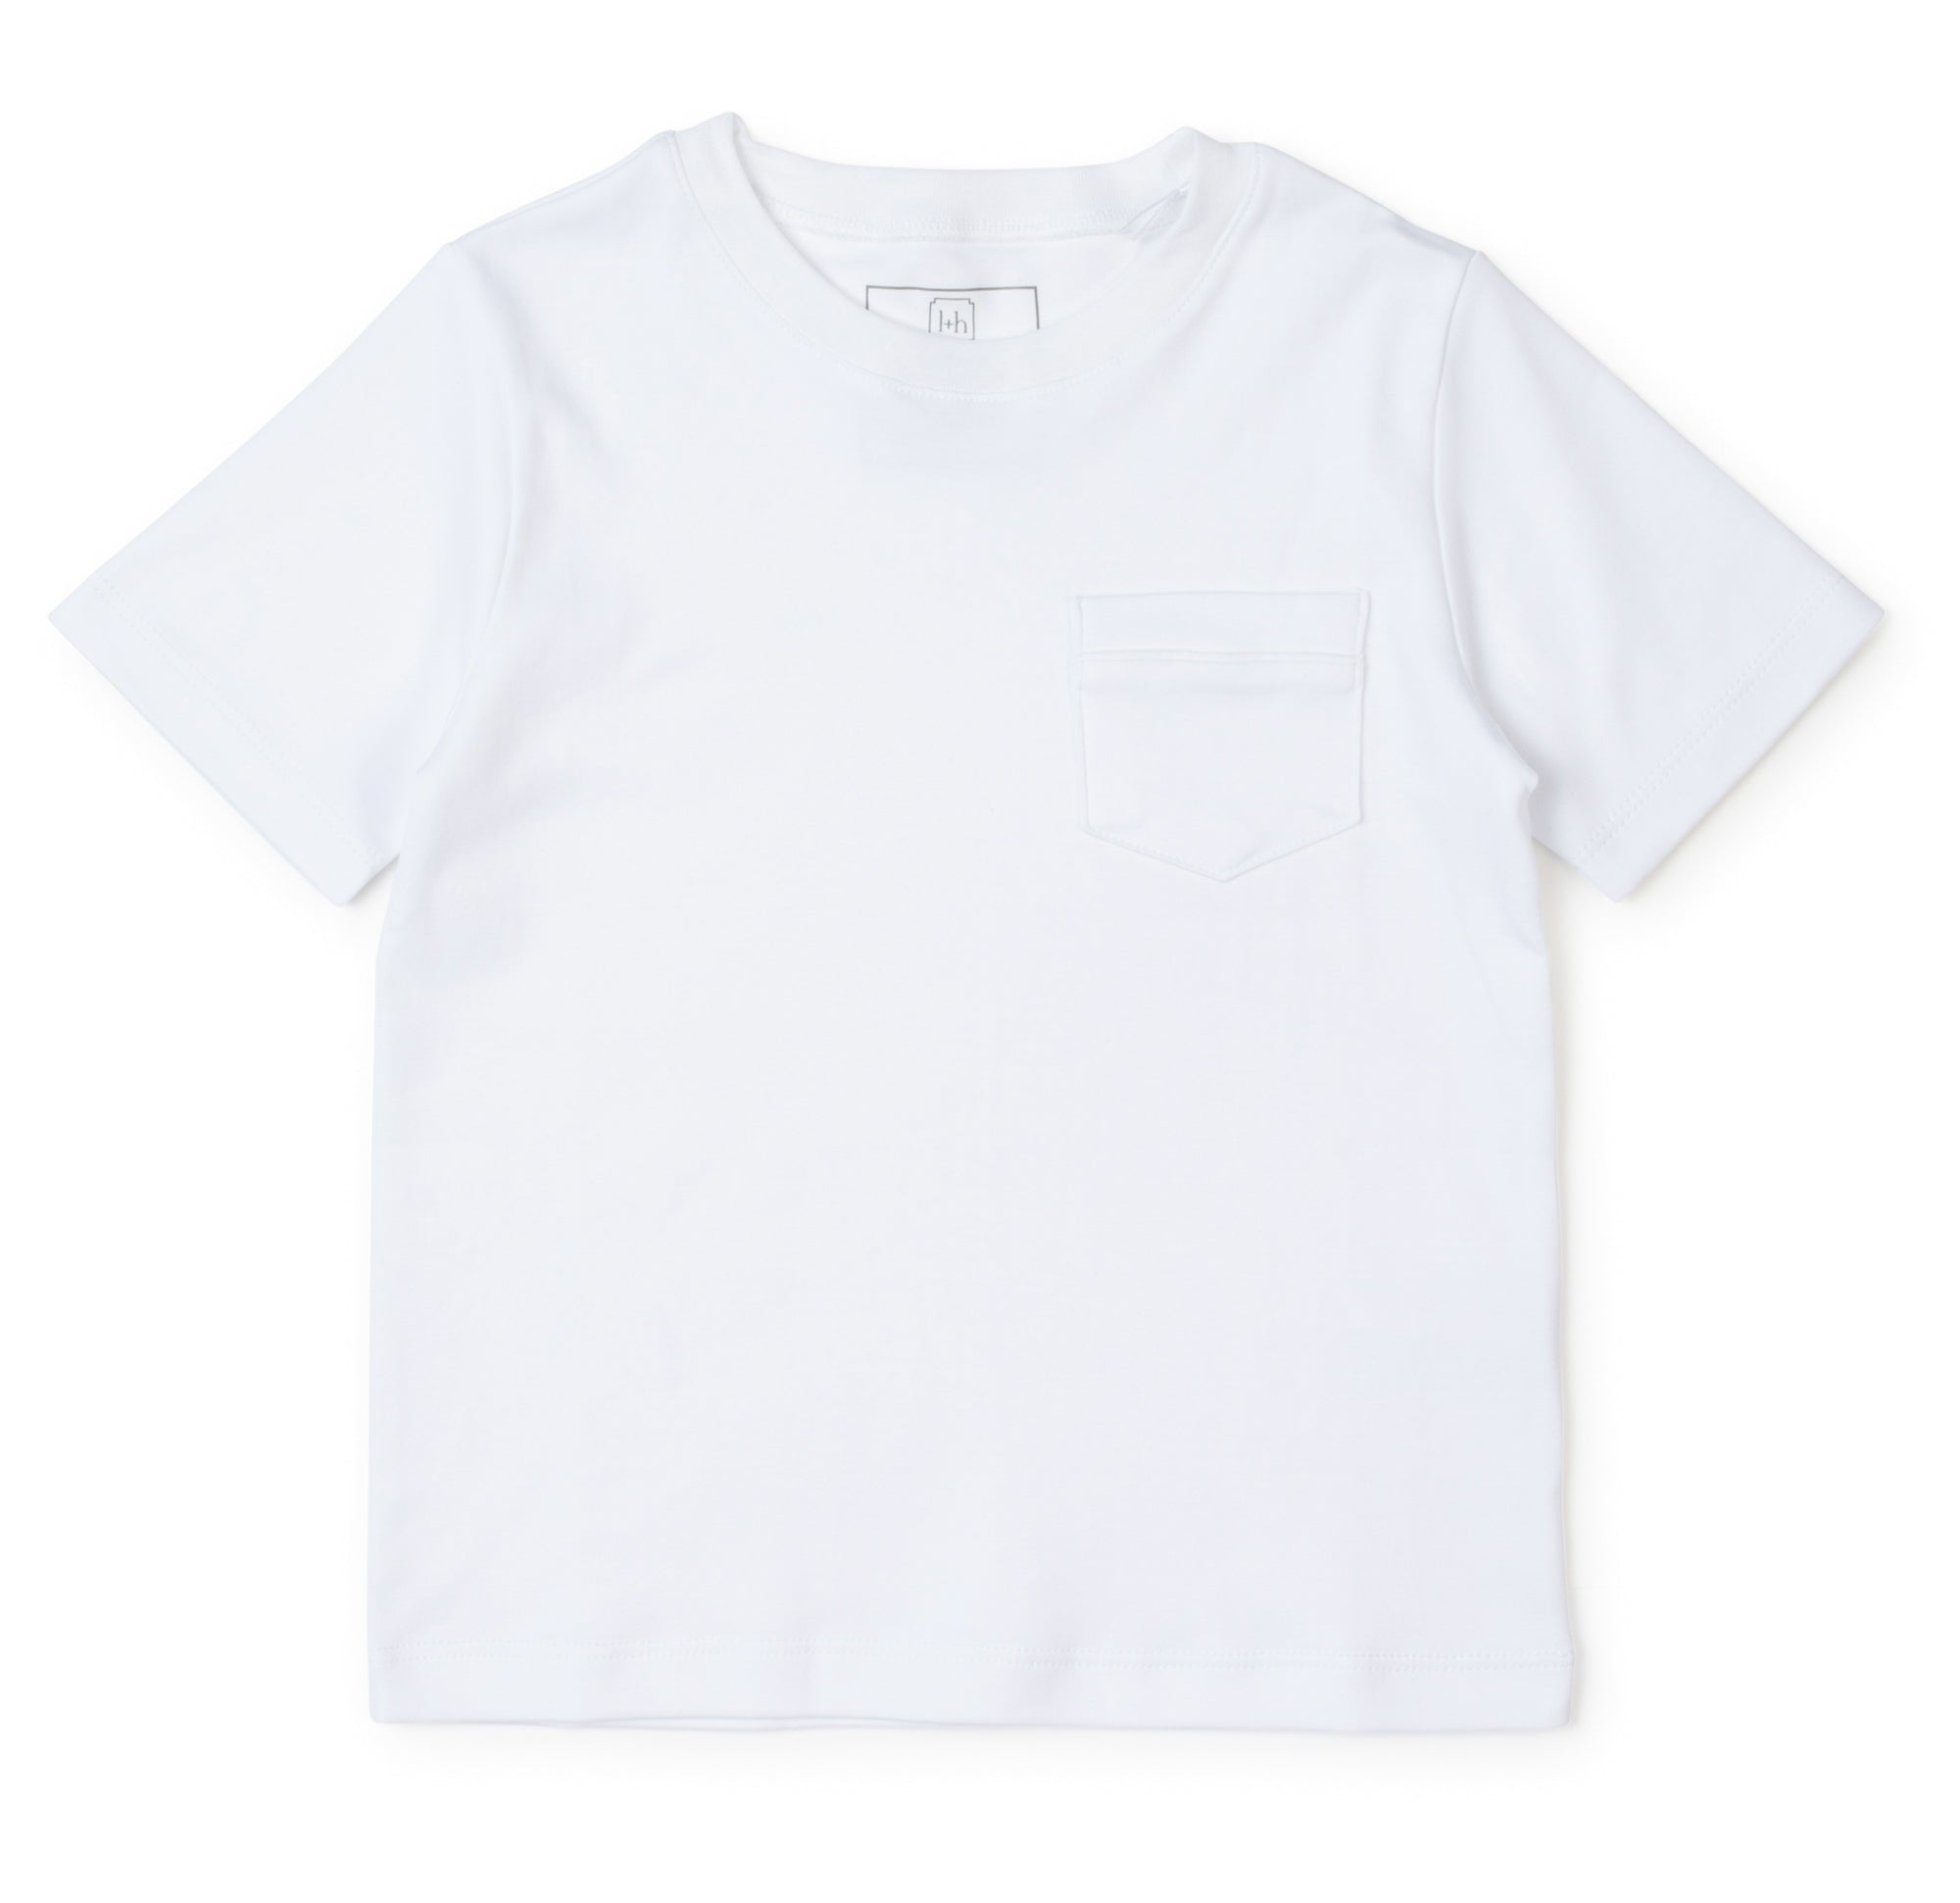 Charles Men's Shortsleeve Pocket T-shirt - White